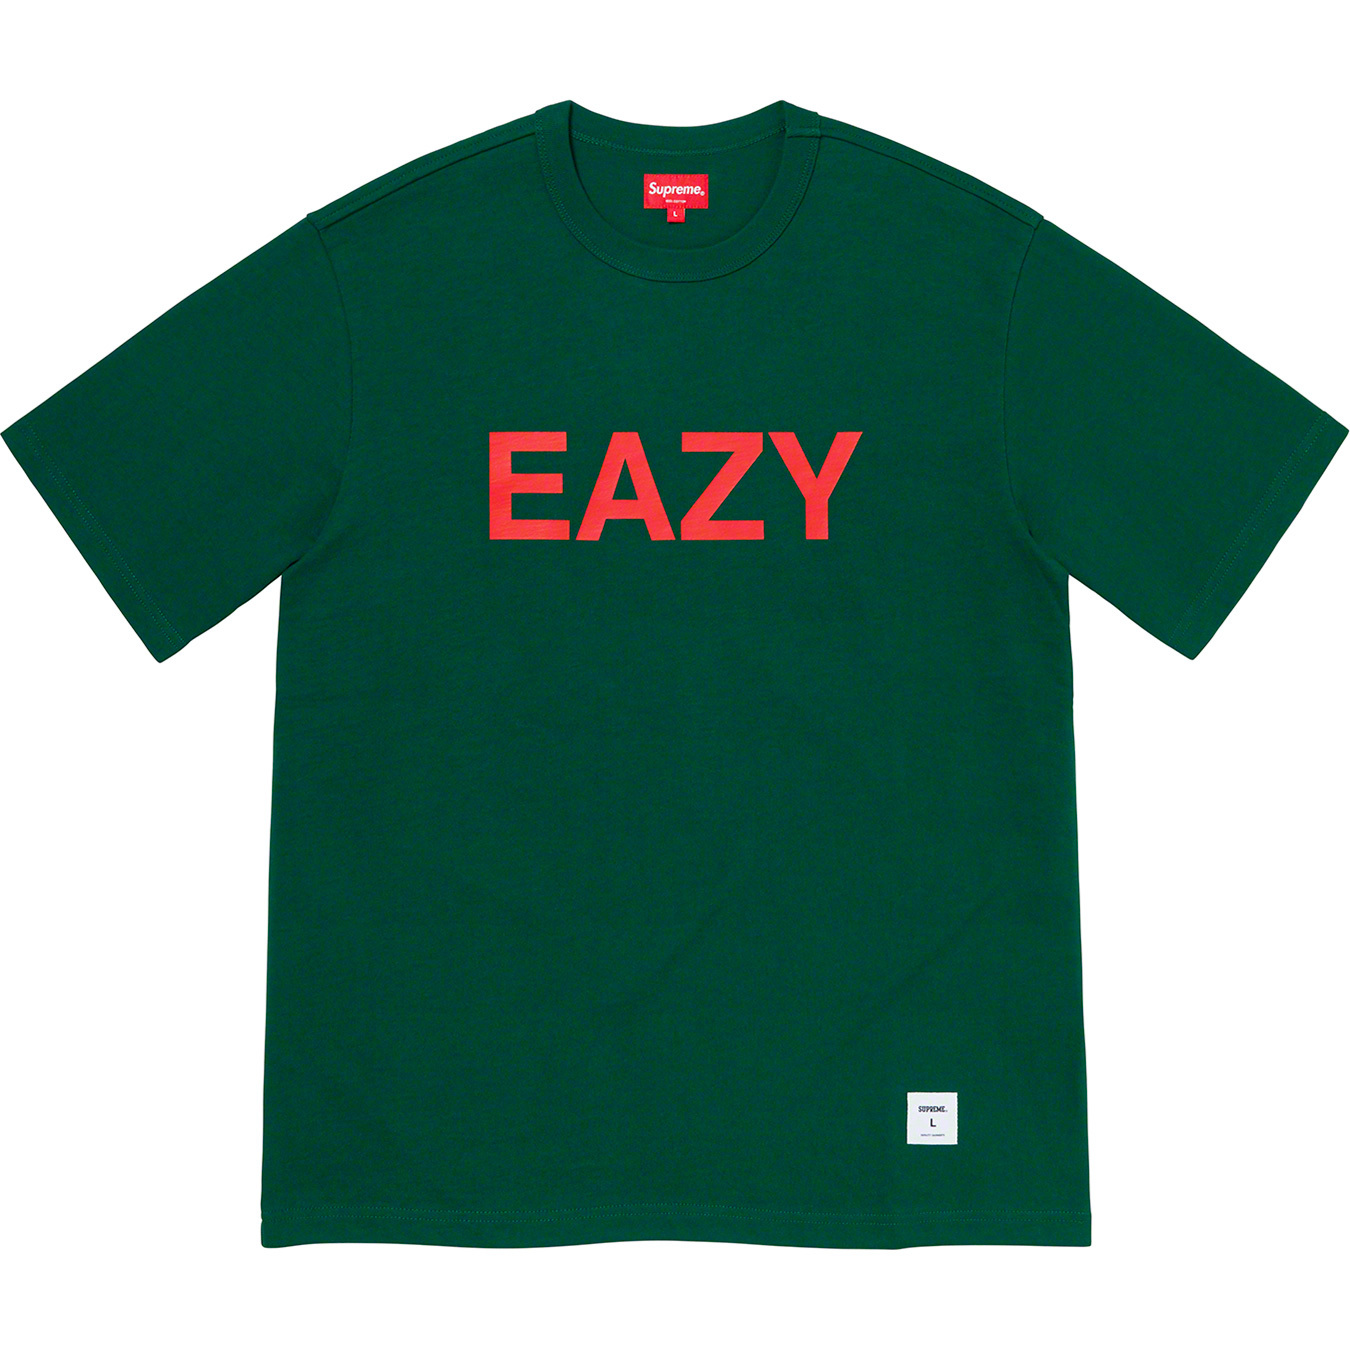 Eazy S/S Top - Supreme Community